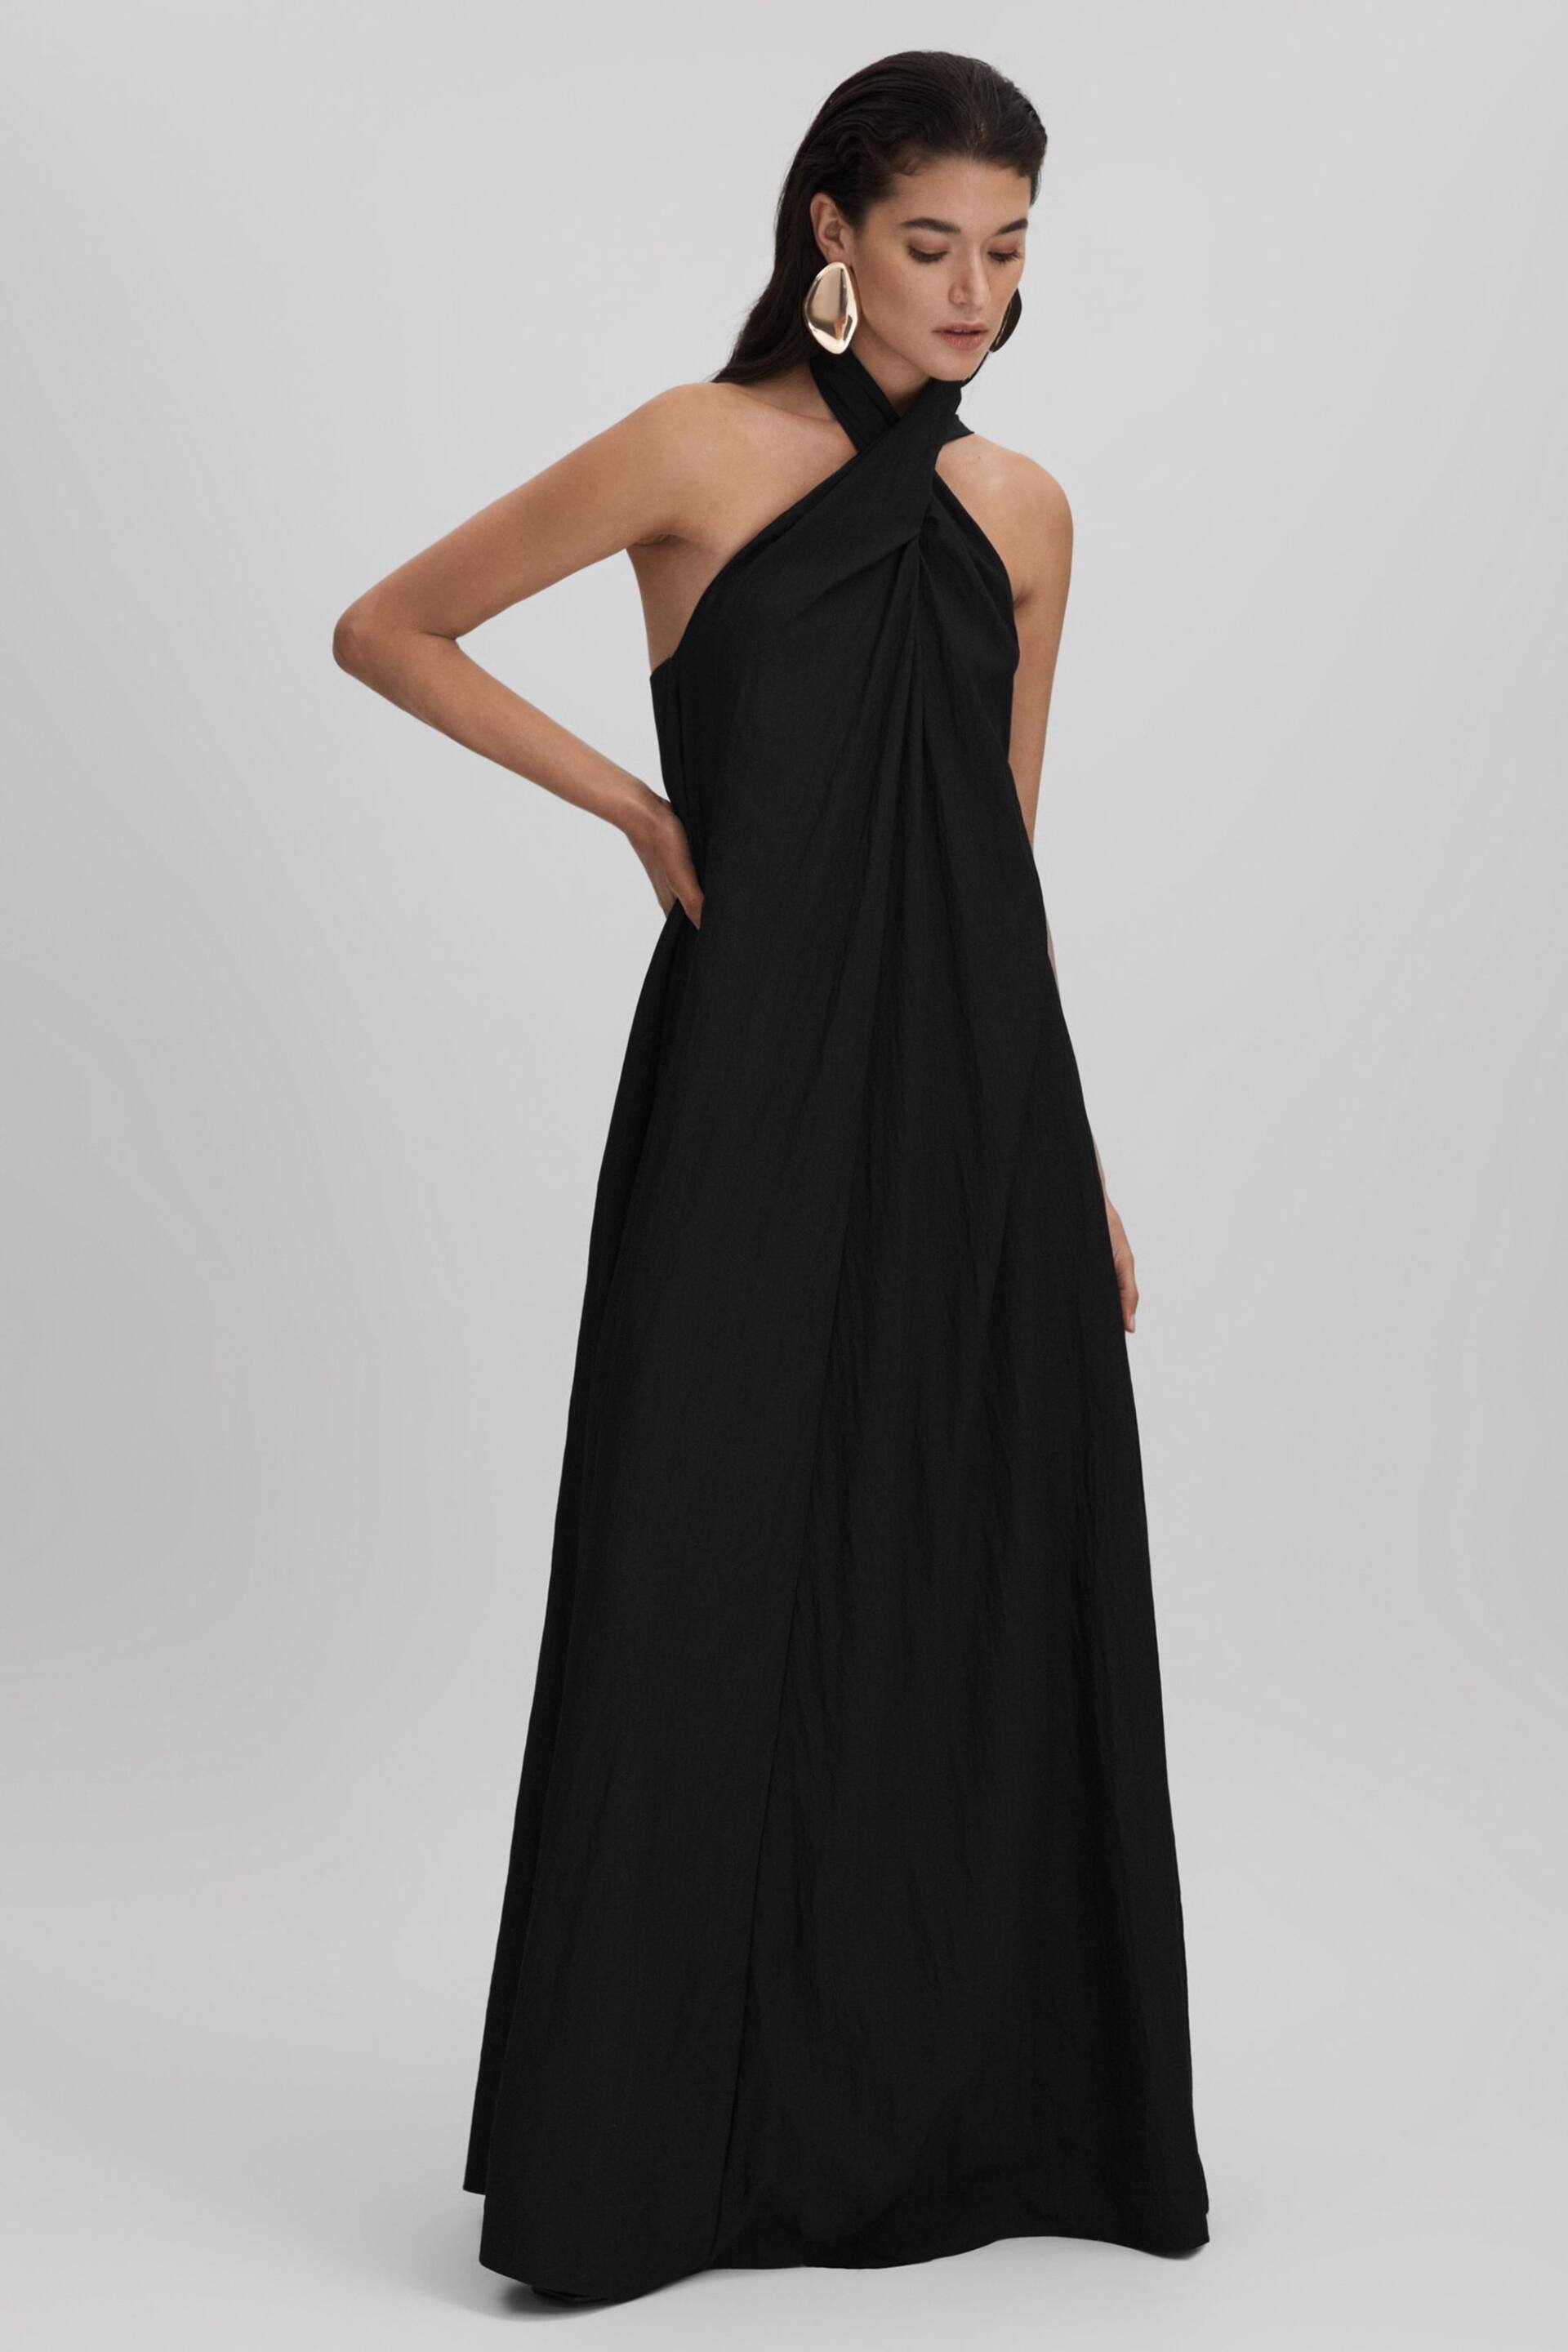 Reiss Black Phoebe Taffeta Halter Neck Maxi Dress - Image 1 of 6